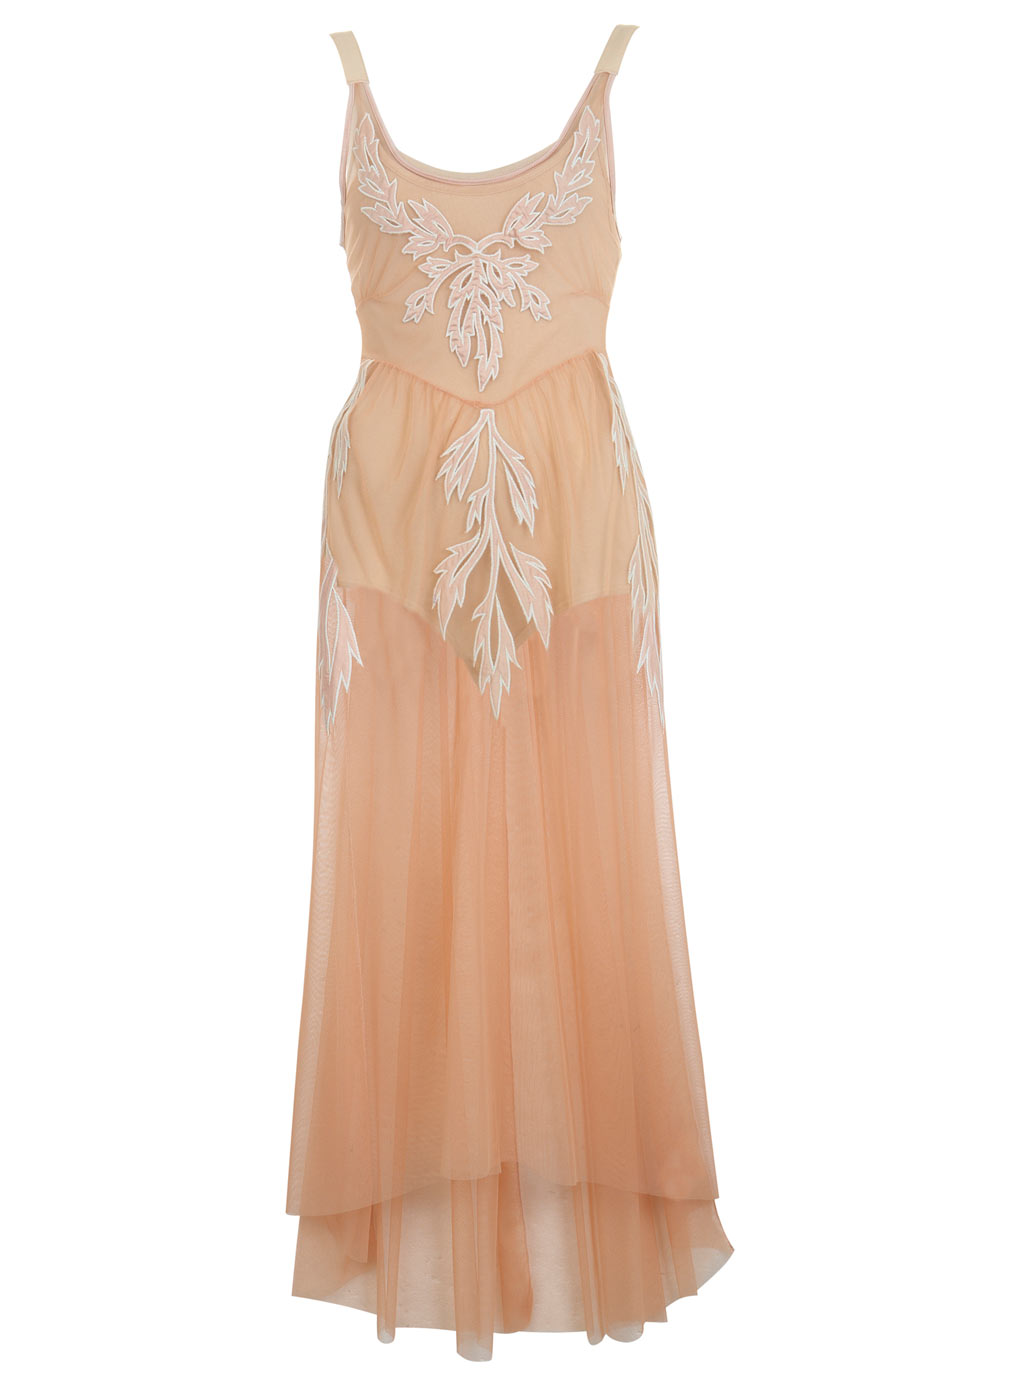 Miss Selfridge UK | women's clothing | girls clothes | prom clothing ...